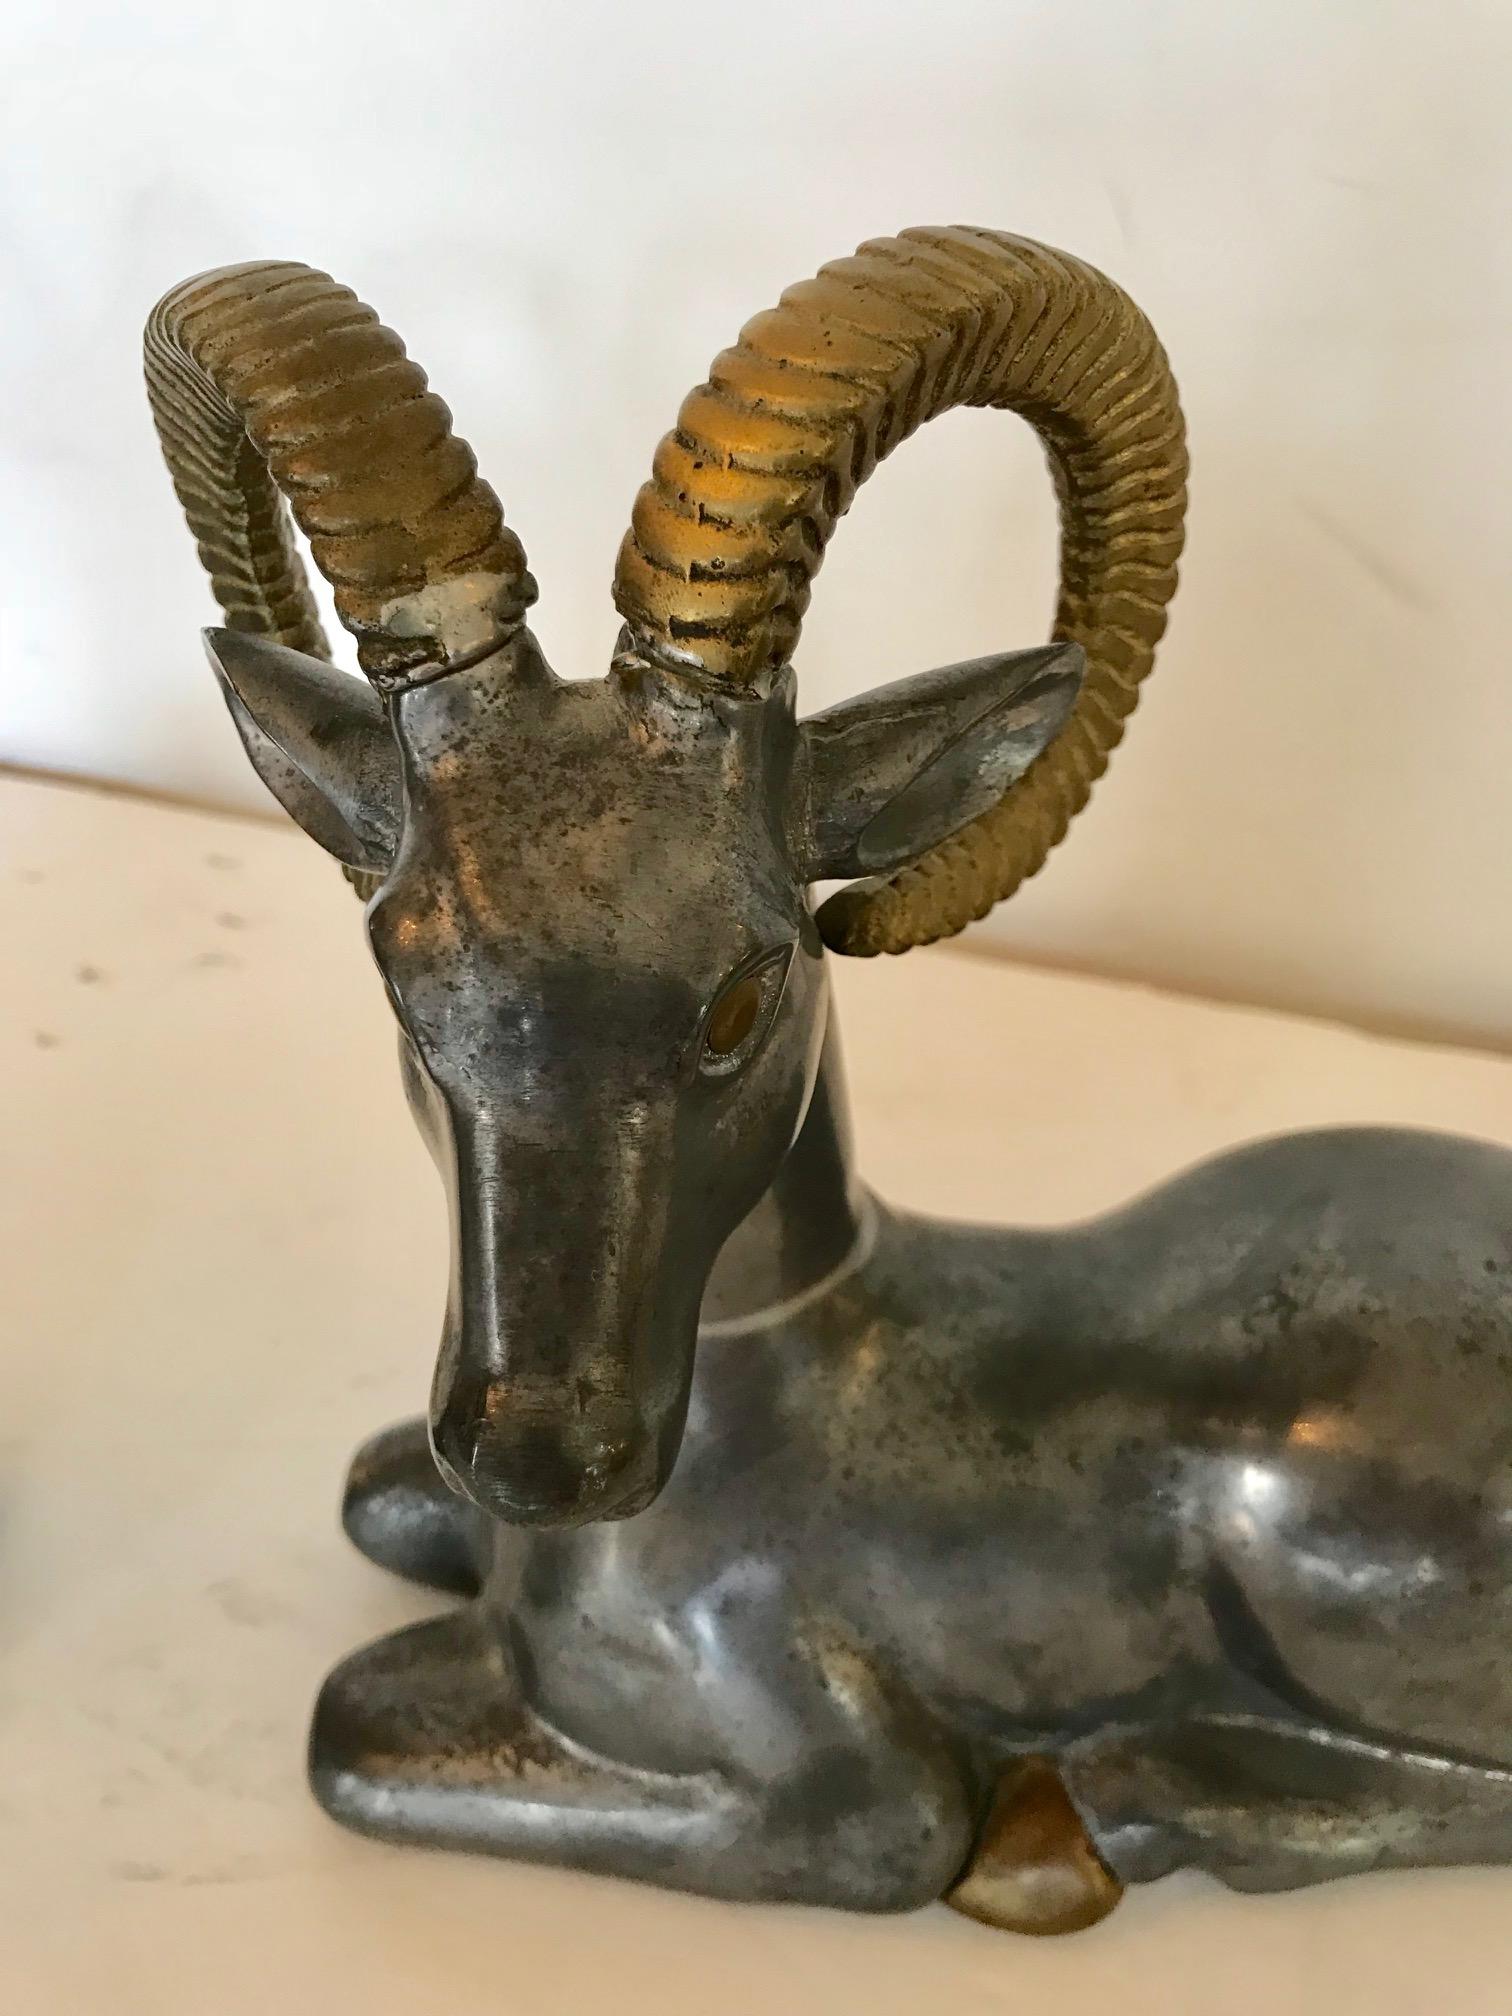 Striking Pair of Mid-Century Modern Mixed-Metal Ram Sculptures For Sale 1